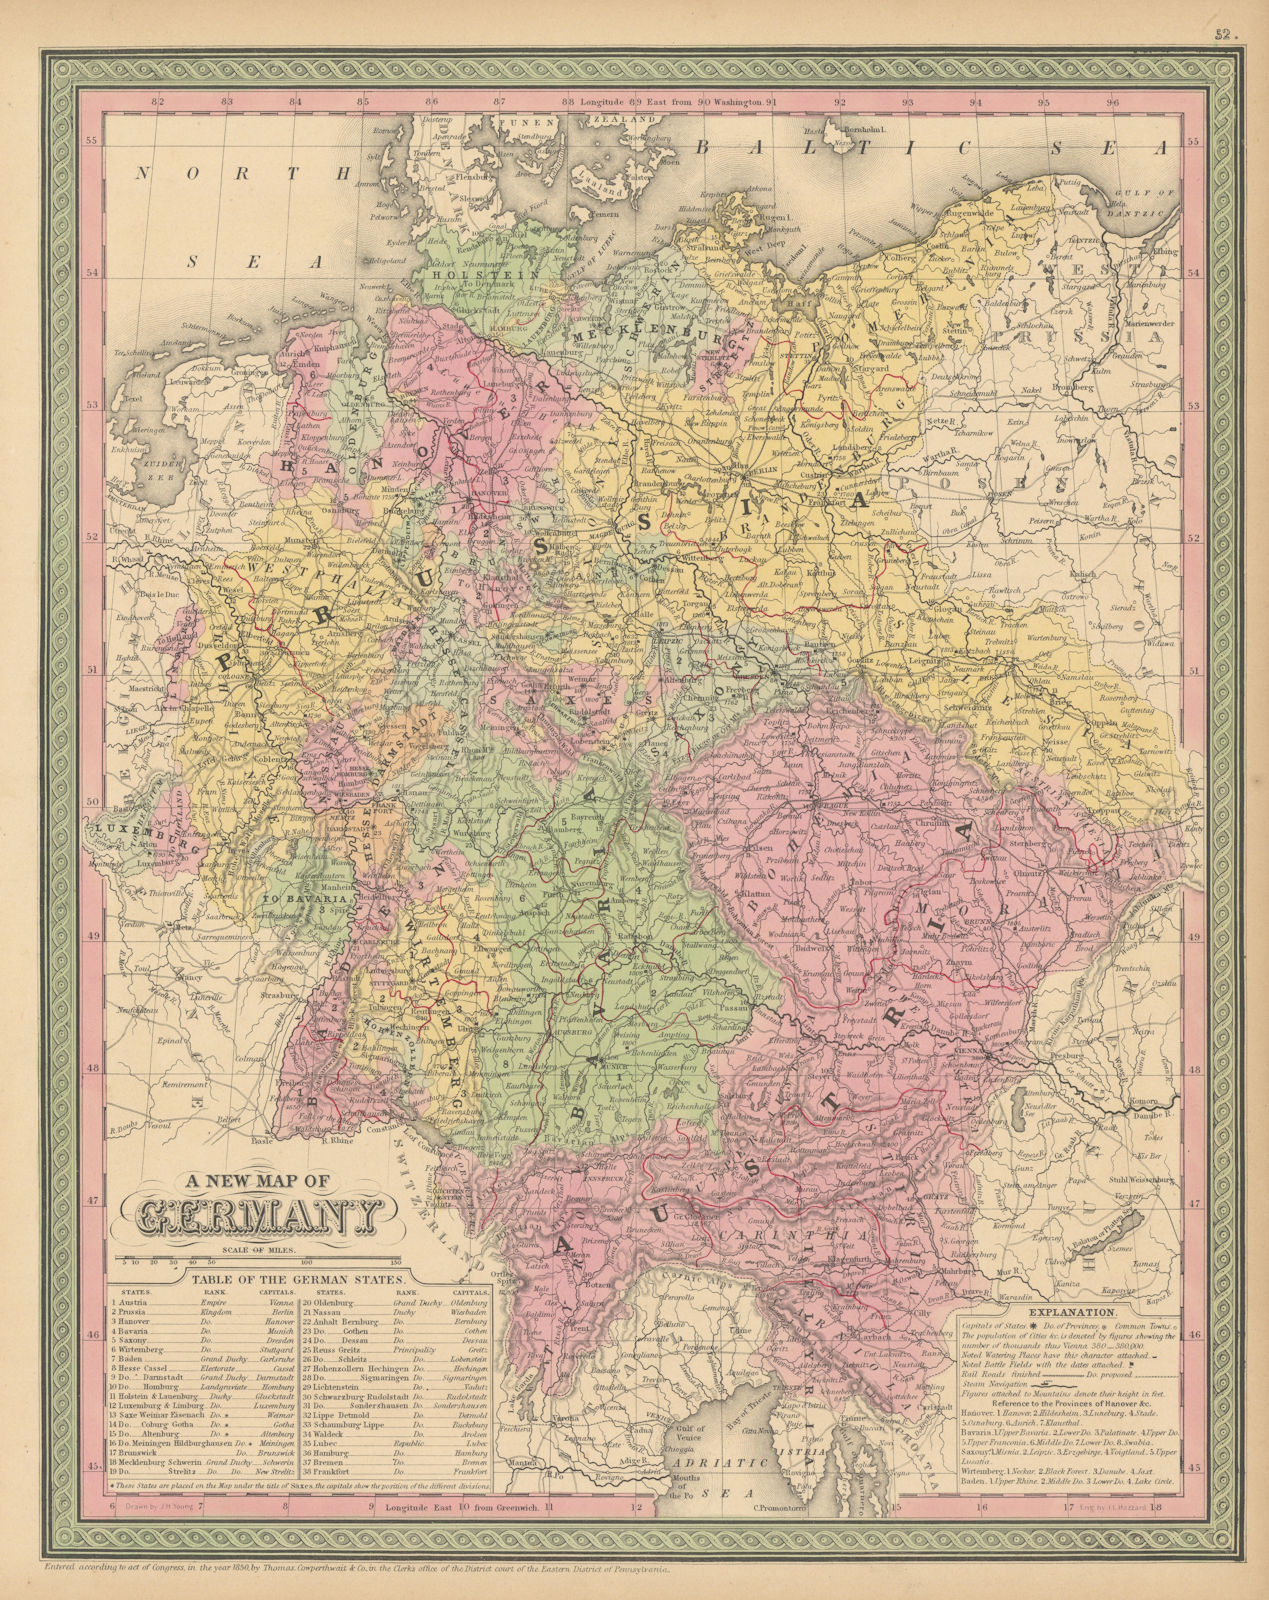 A new map of Germany. Austria Bohemia Moravia. THOMAS, COWPERTHWAIT 1852